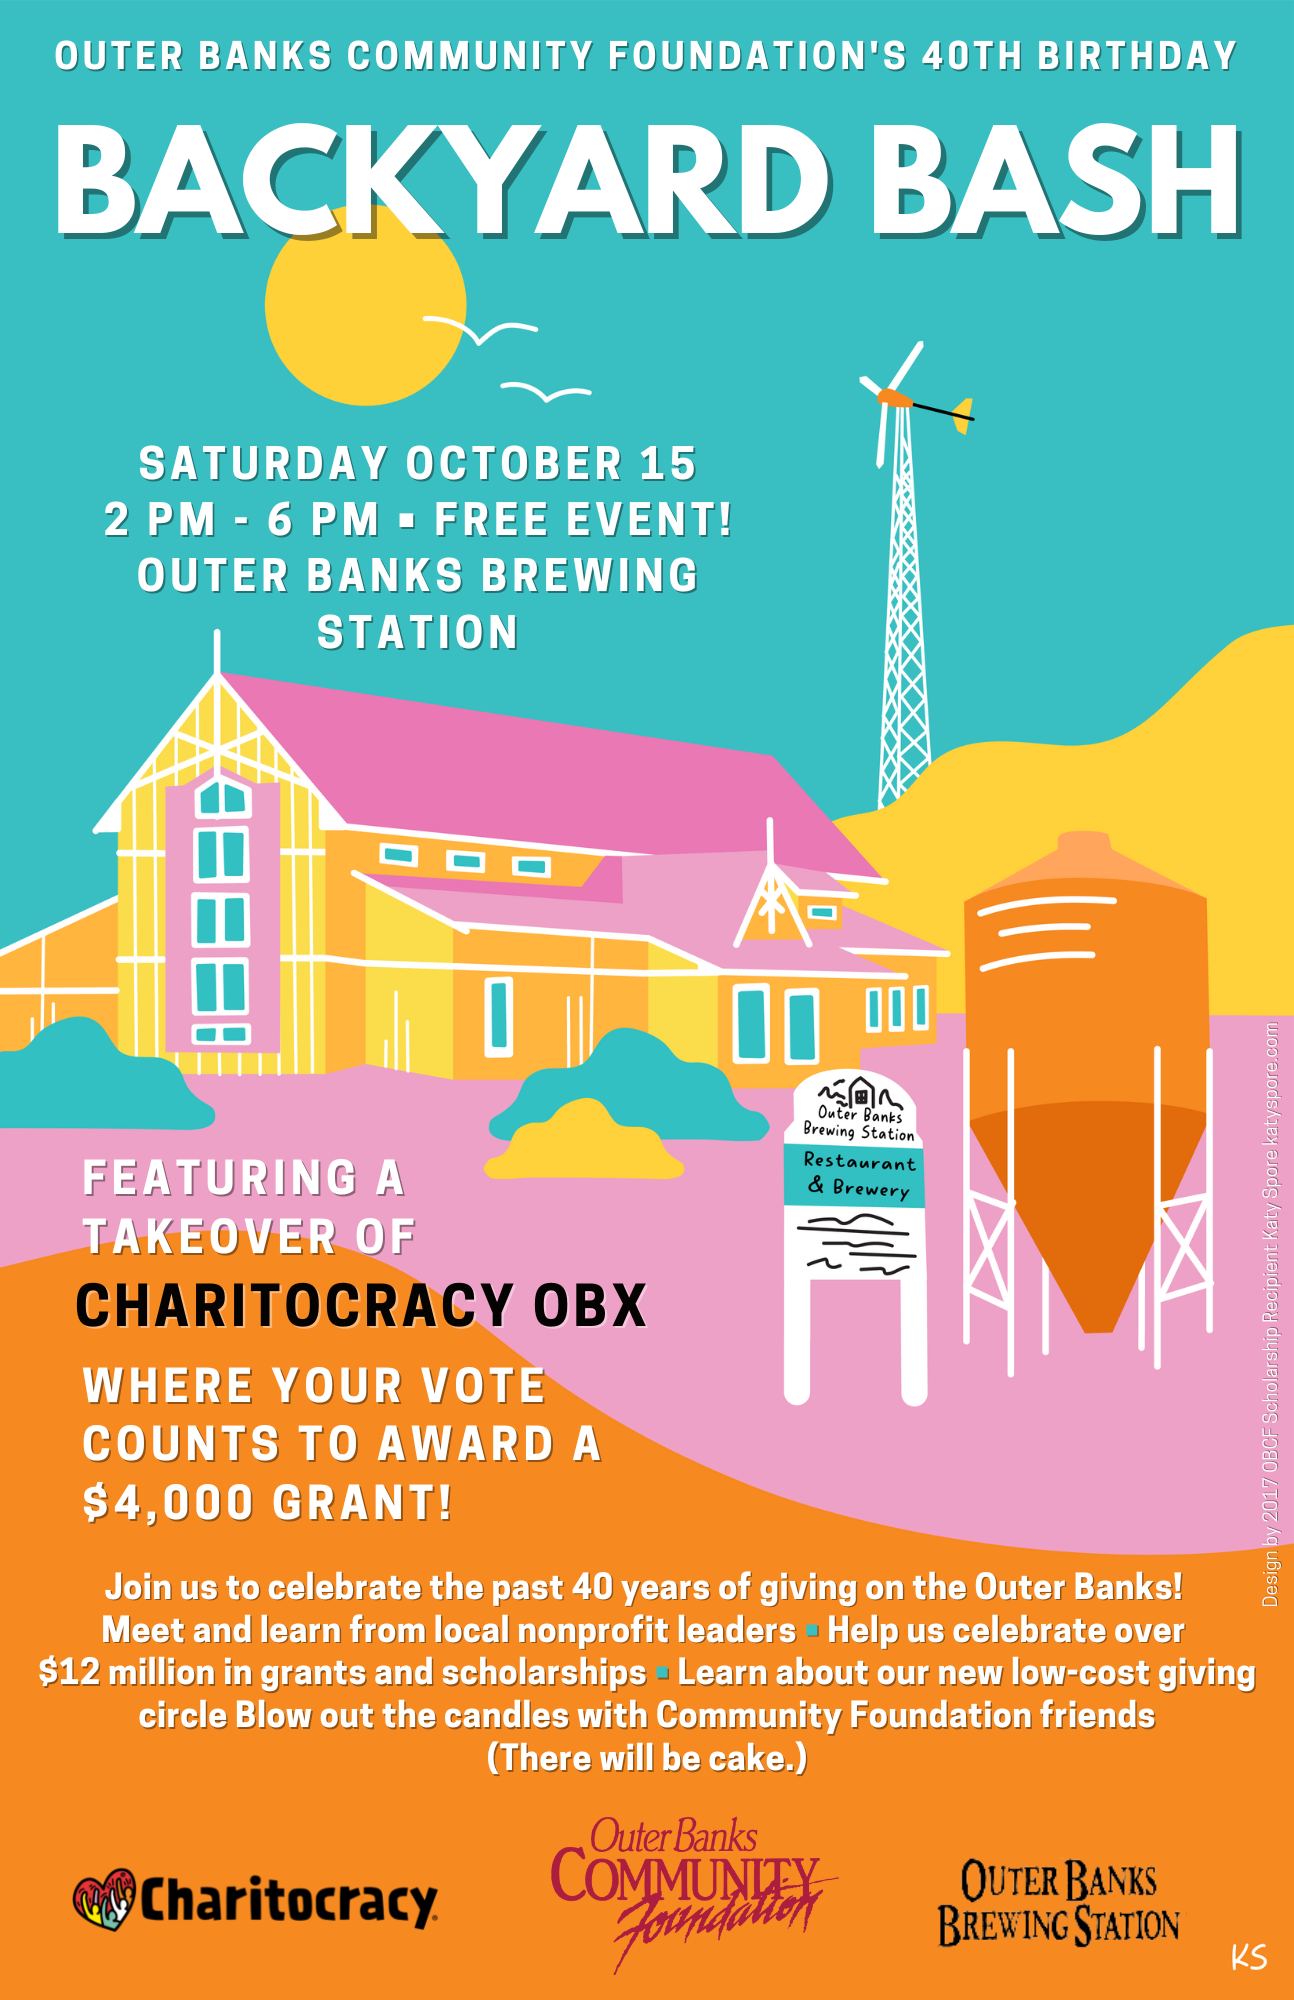 Outer Banks Community Foundation's 40th Birthday Backyard Bash